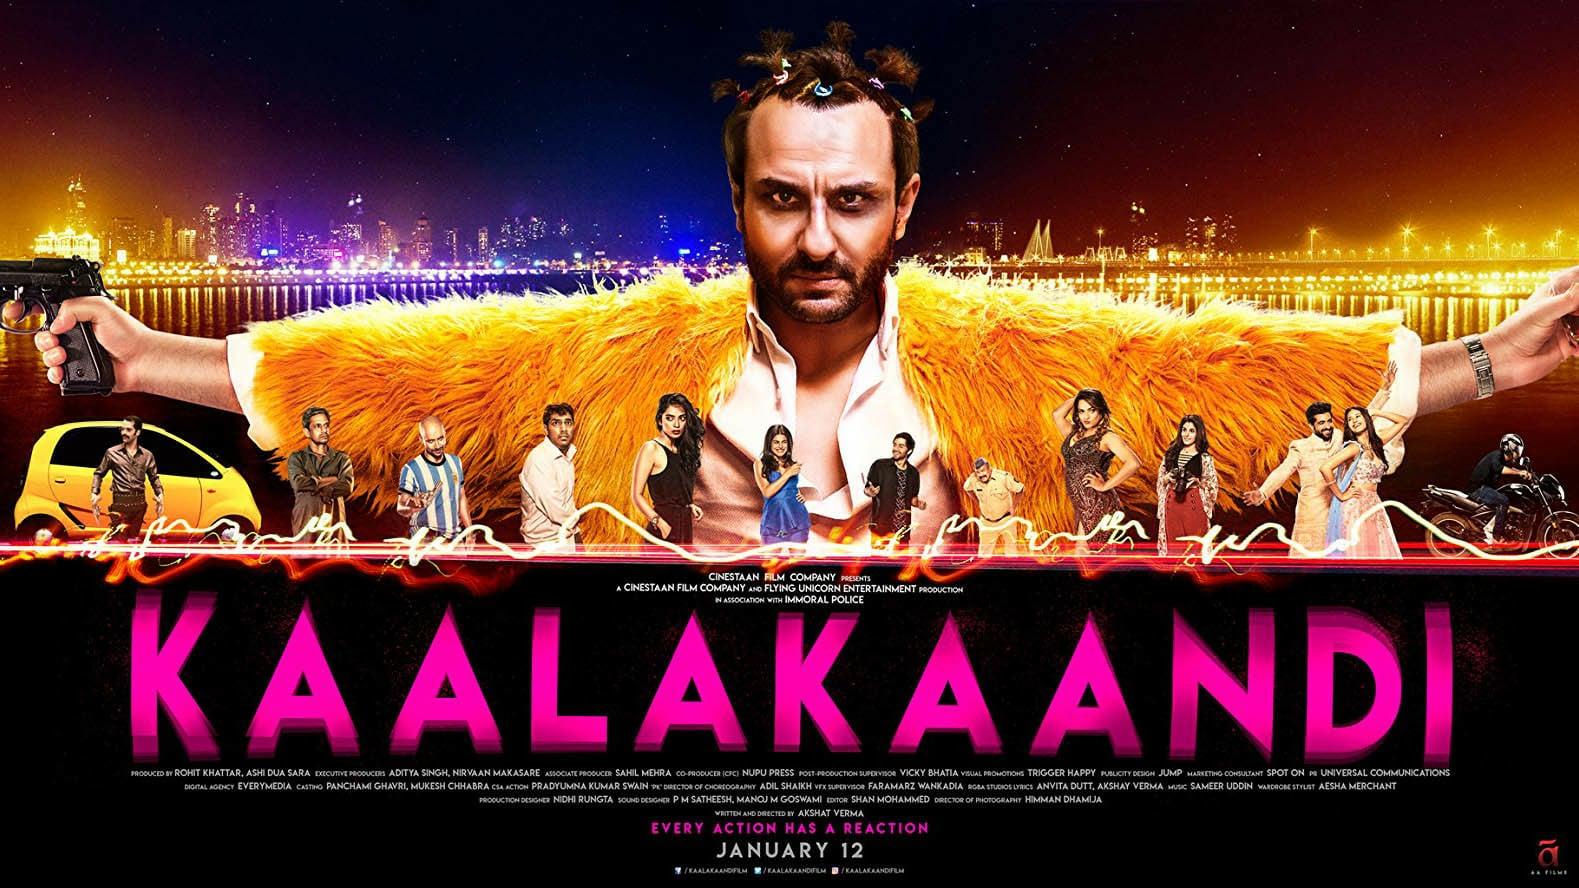 Kaalakaandi early review: Saif Ali Khan is super fun to watch, says Twitter  – India TV